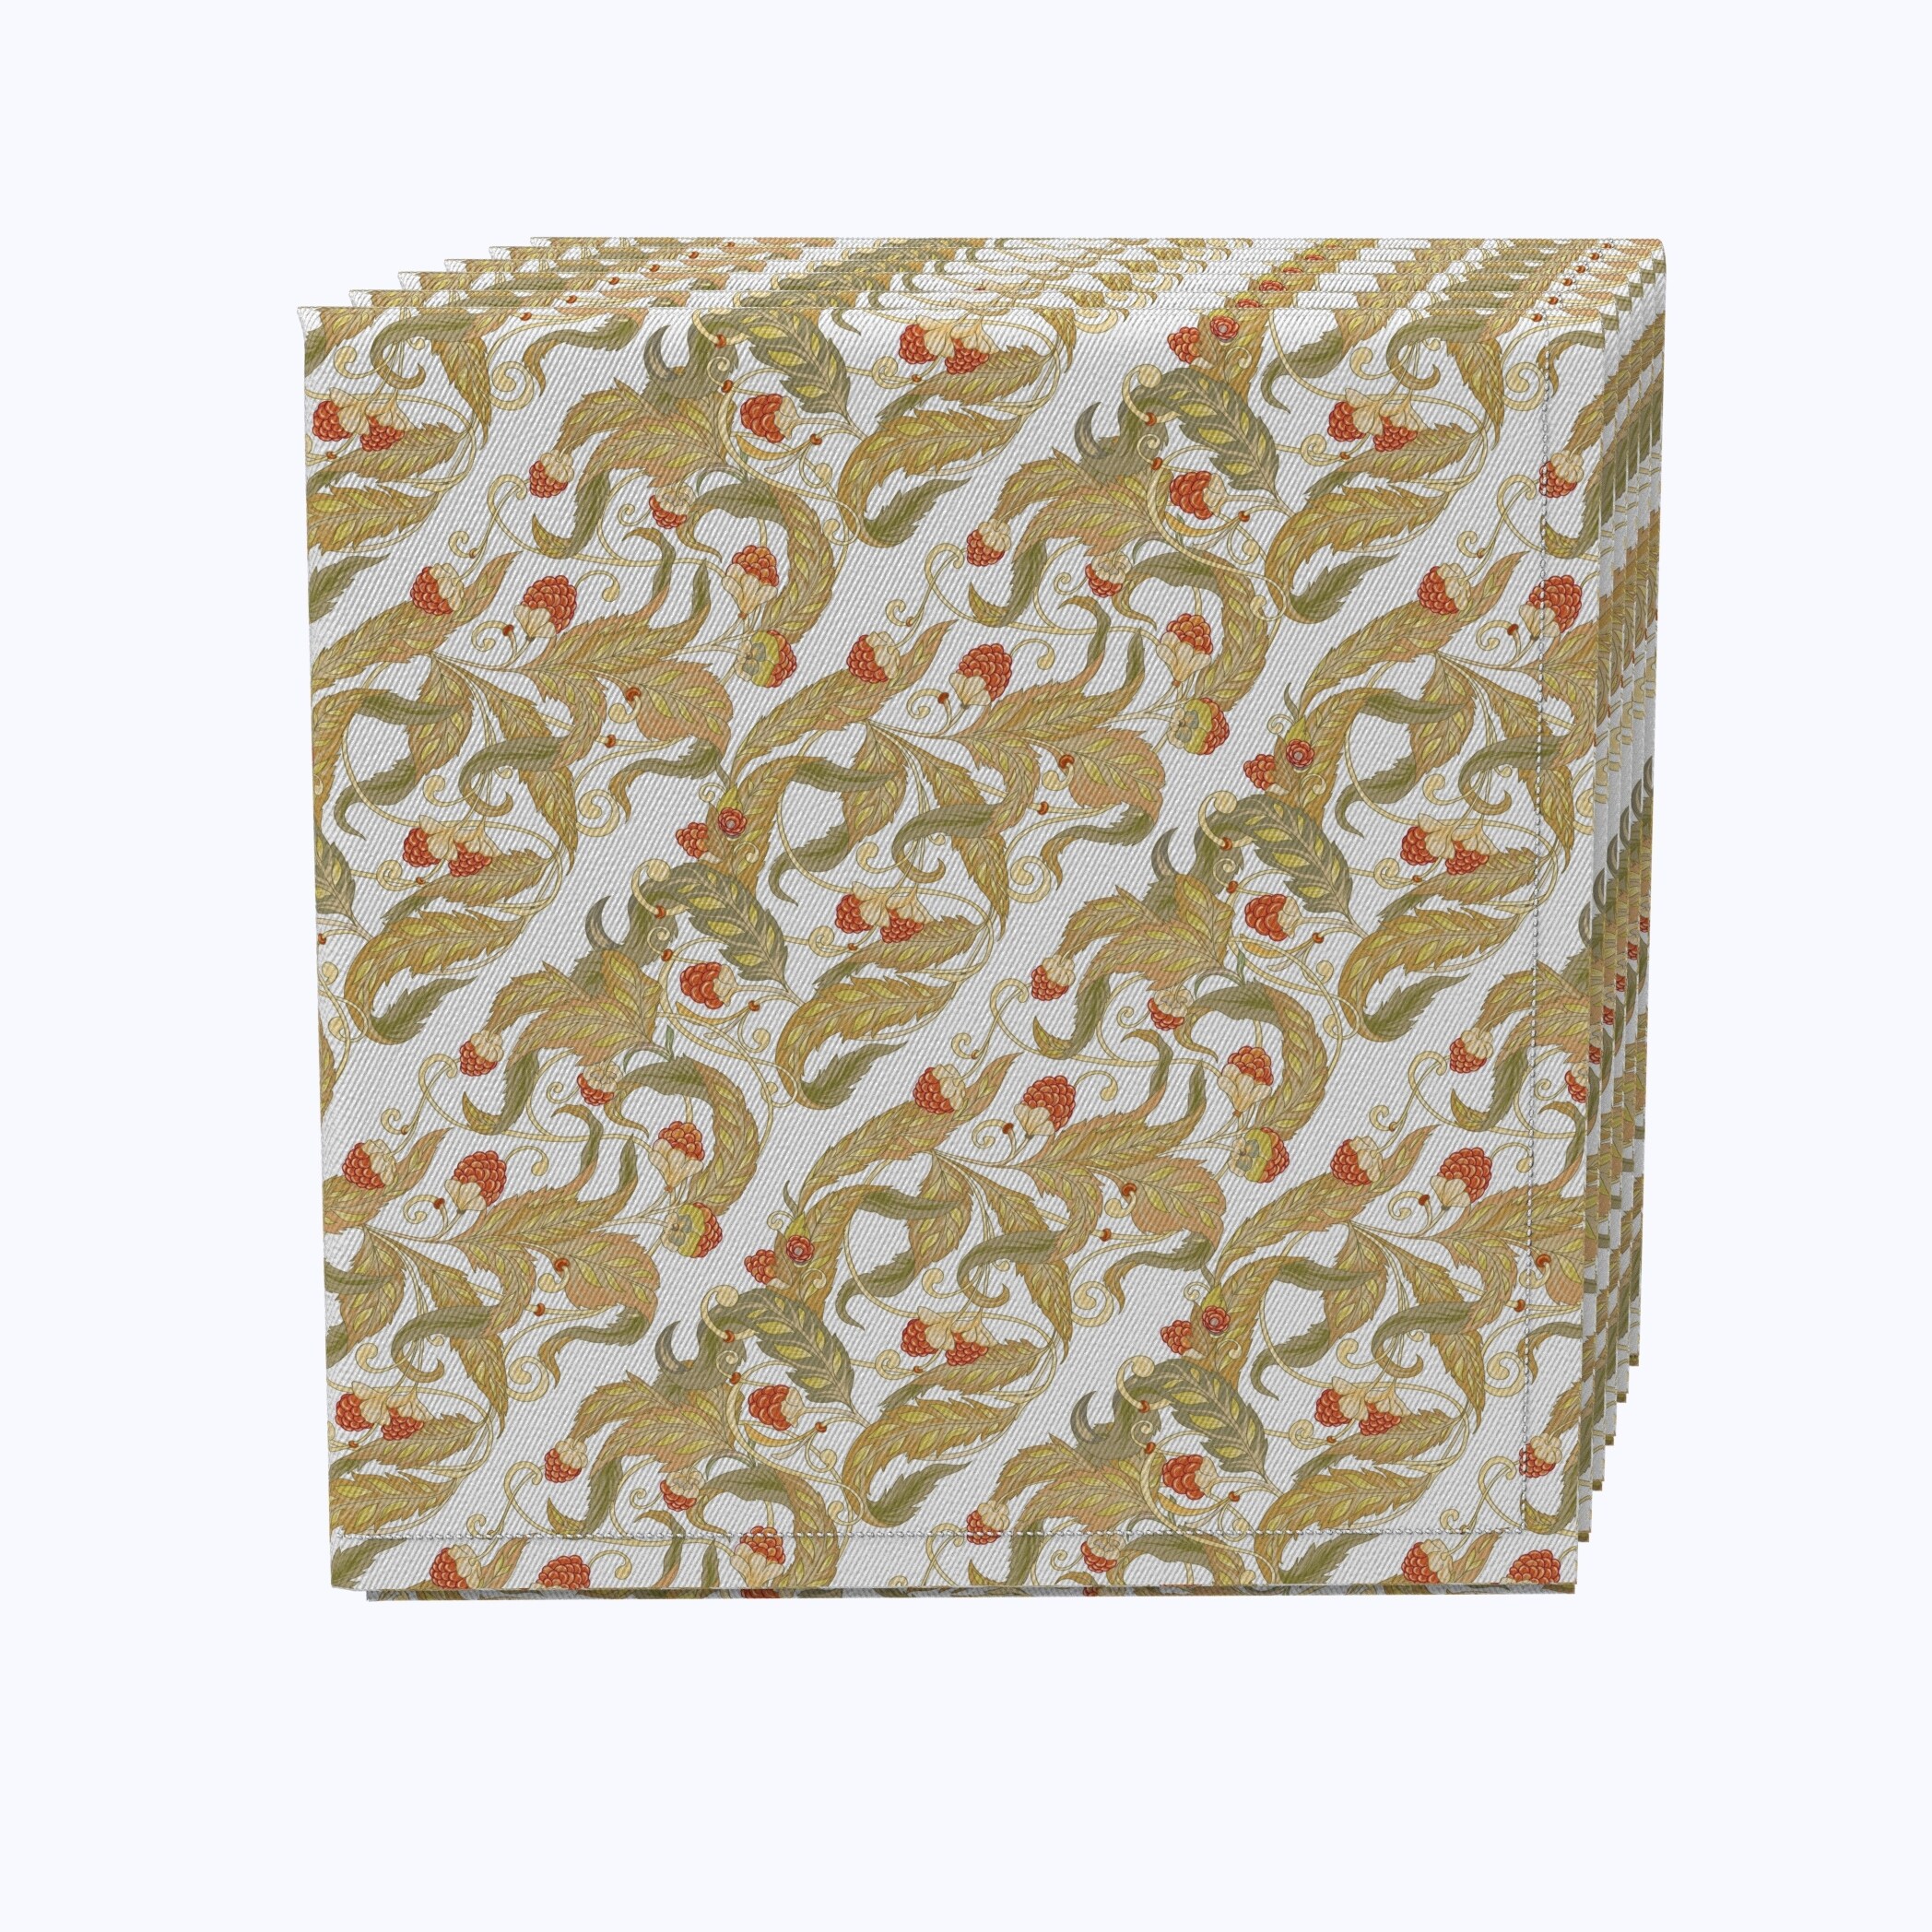 Fabric Textile Products, Inc. Napkin Set of 4, 100% Cotton, 20x20", Floral 119 - 20 x 20